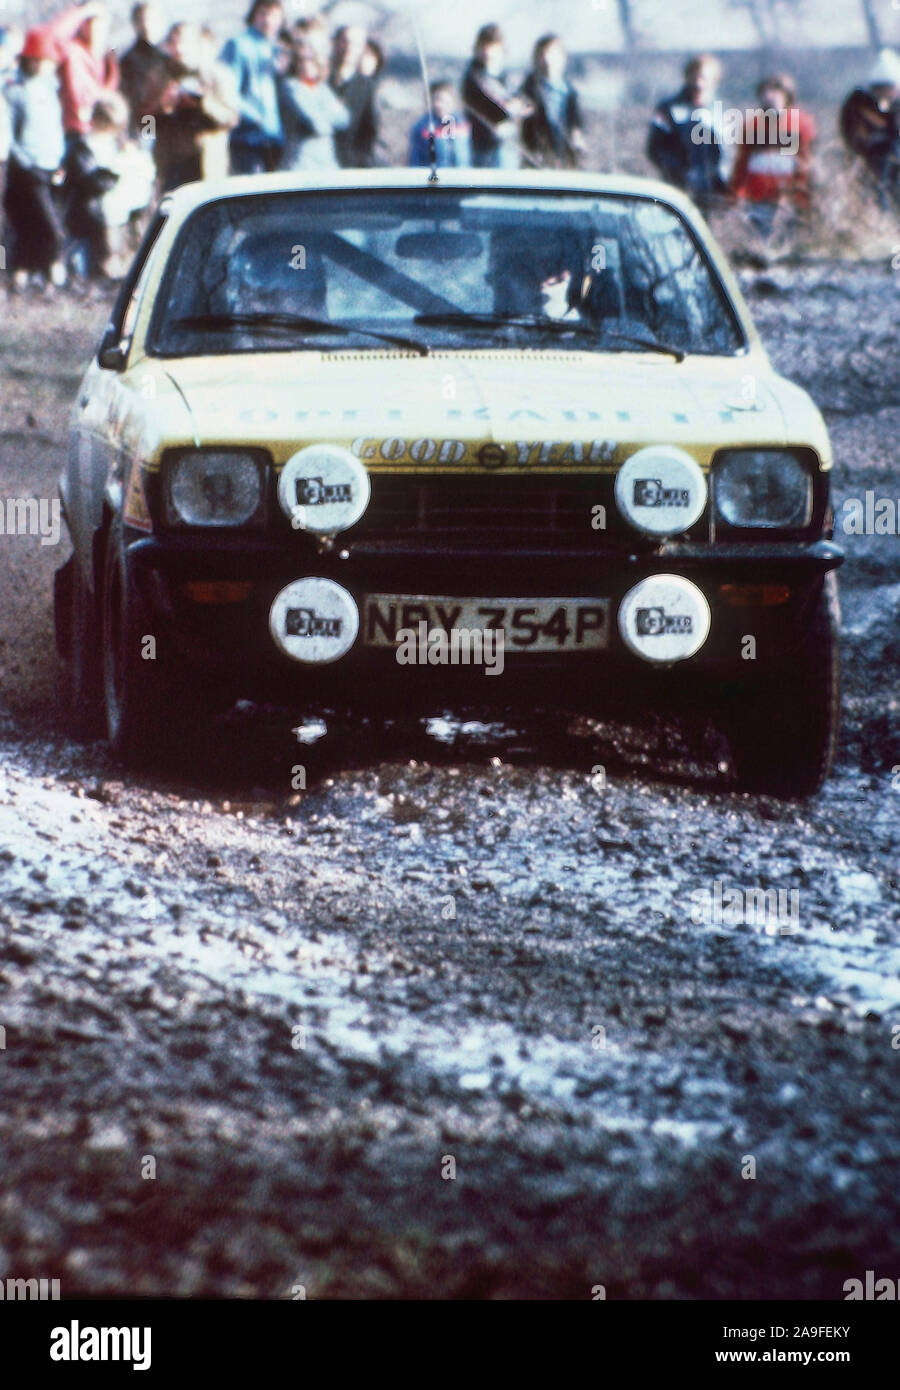 Rallye automobile 1975, Angleterre du Nord, Royaume-Uni Banque D'Images